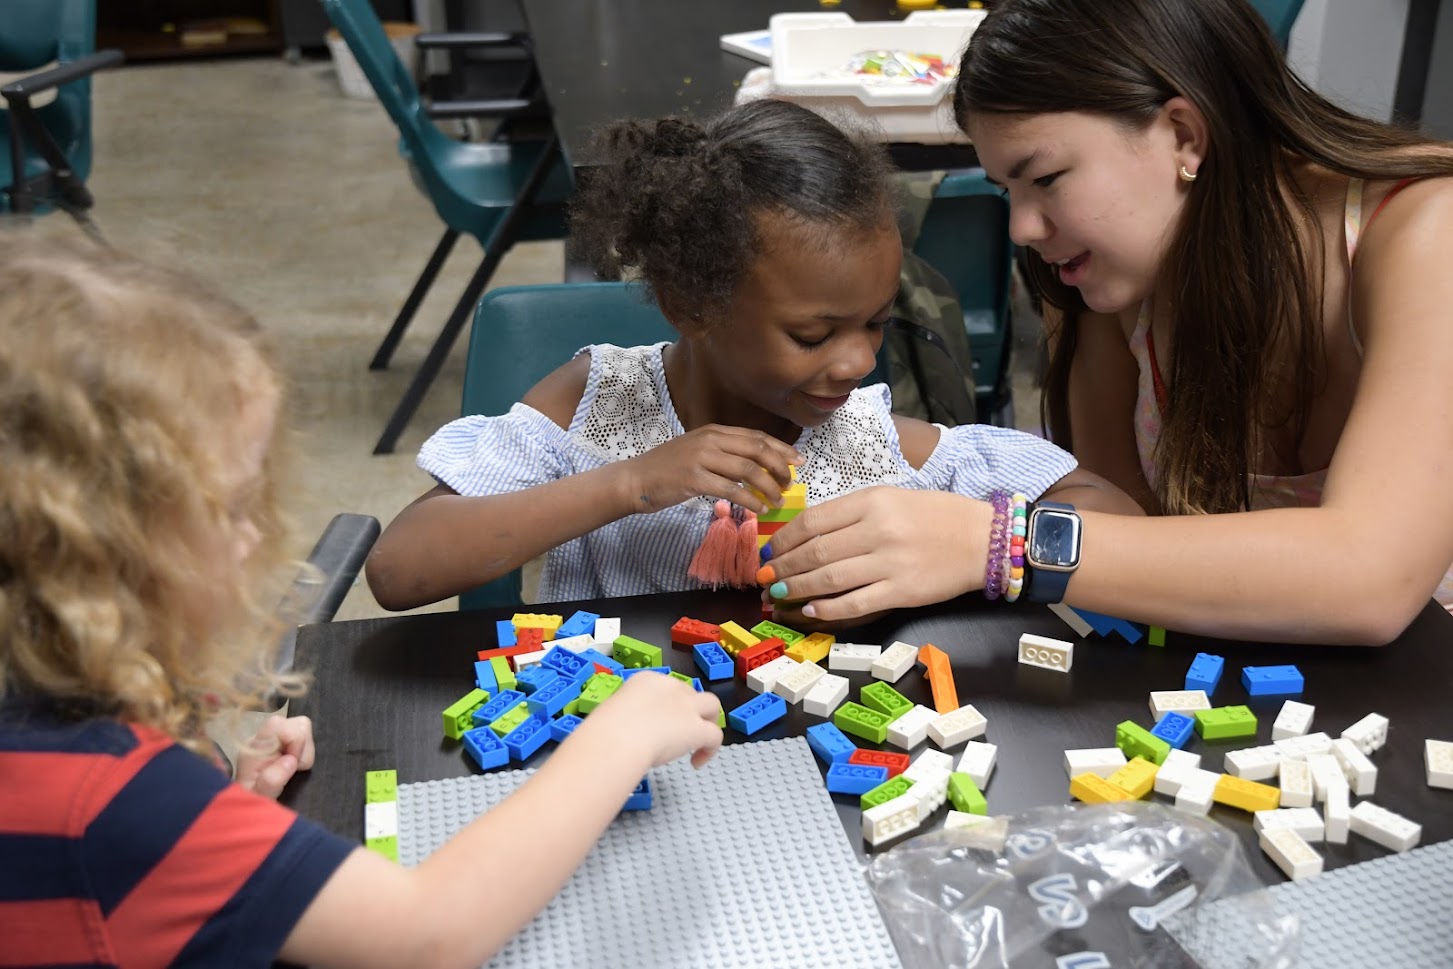 A volunteer is helping two children build Legos.